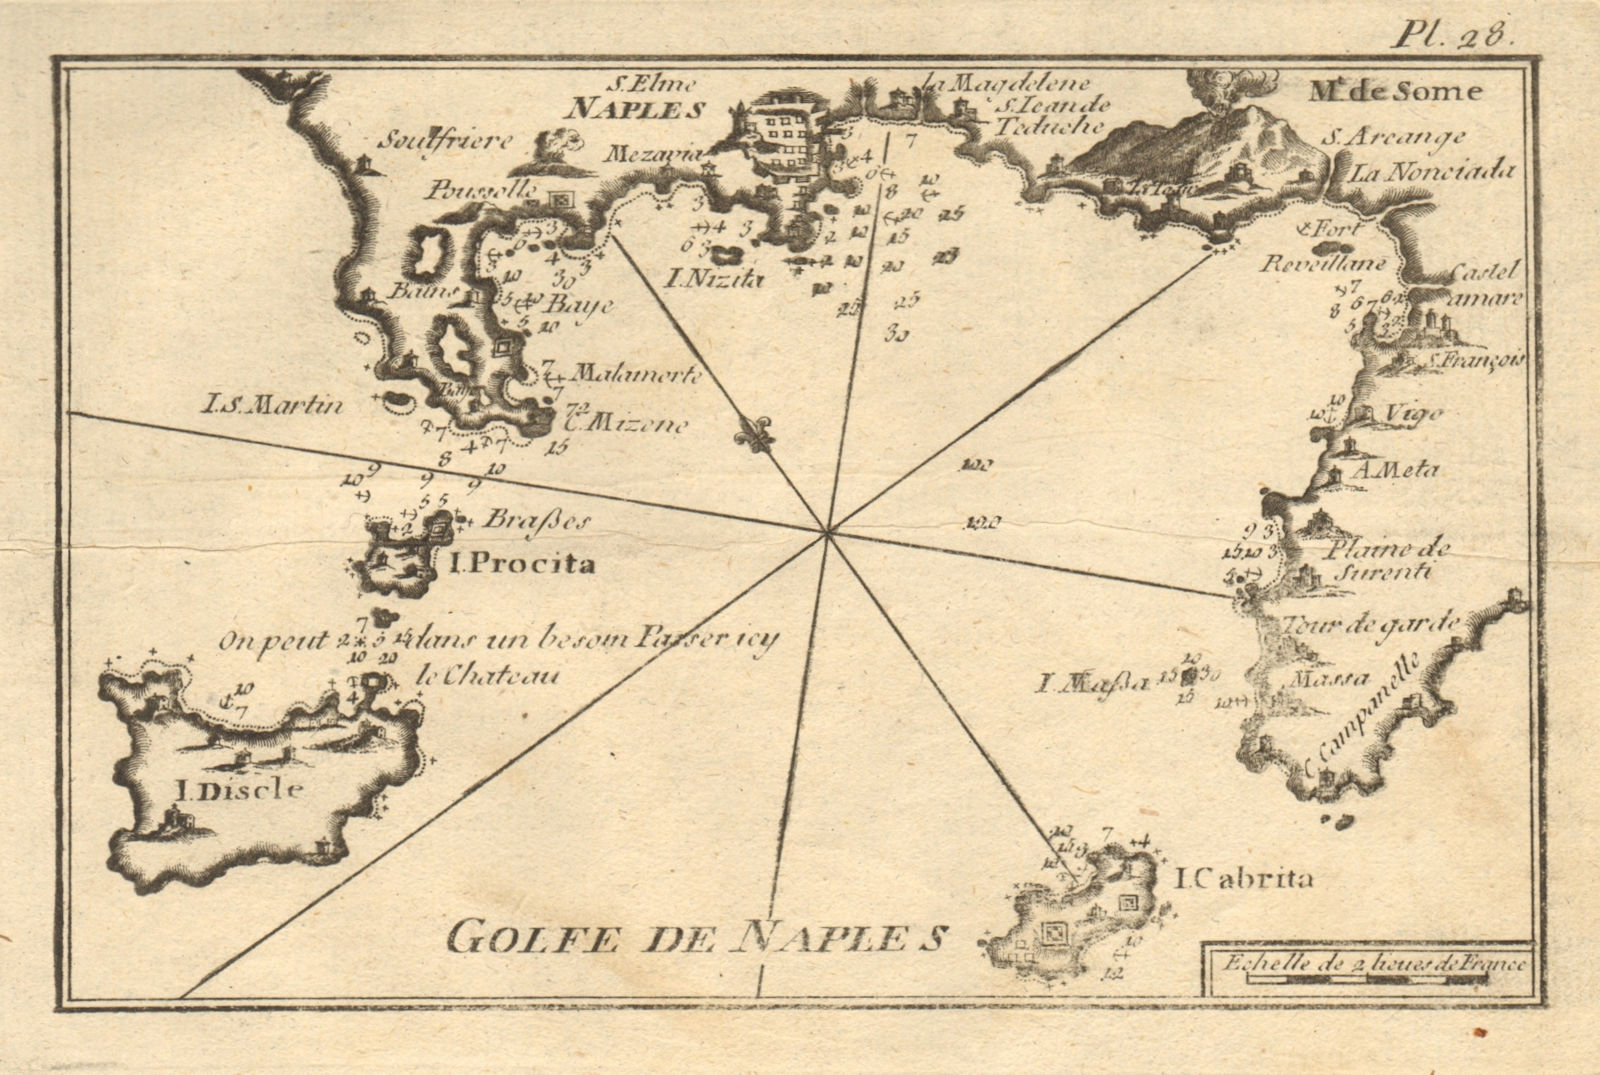 Gulf/Golfe de Naples Cabrita Discle Procita. Capri Ischia. Italy. ROUX 1804 map